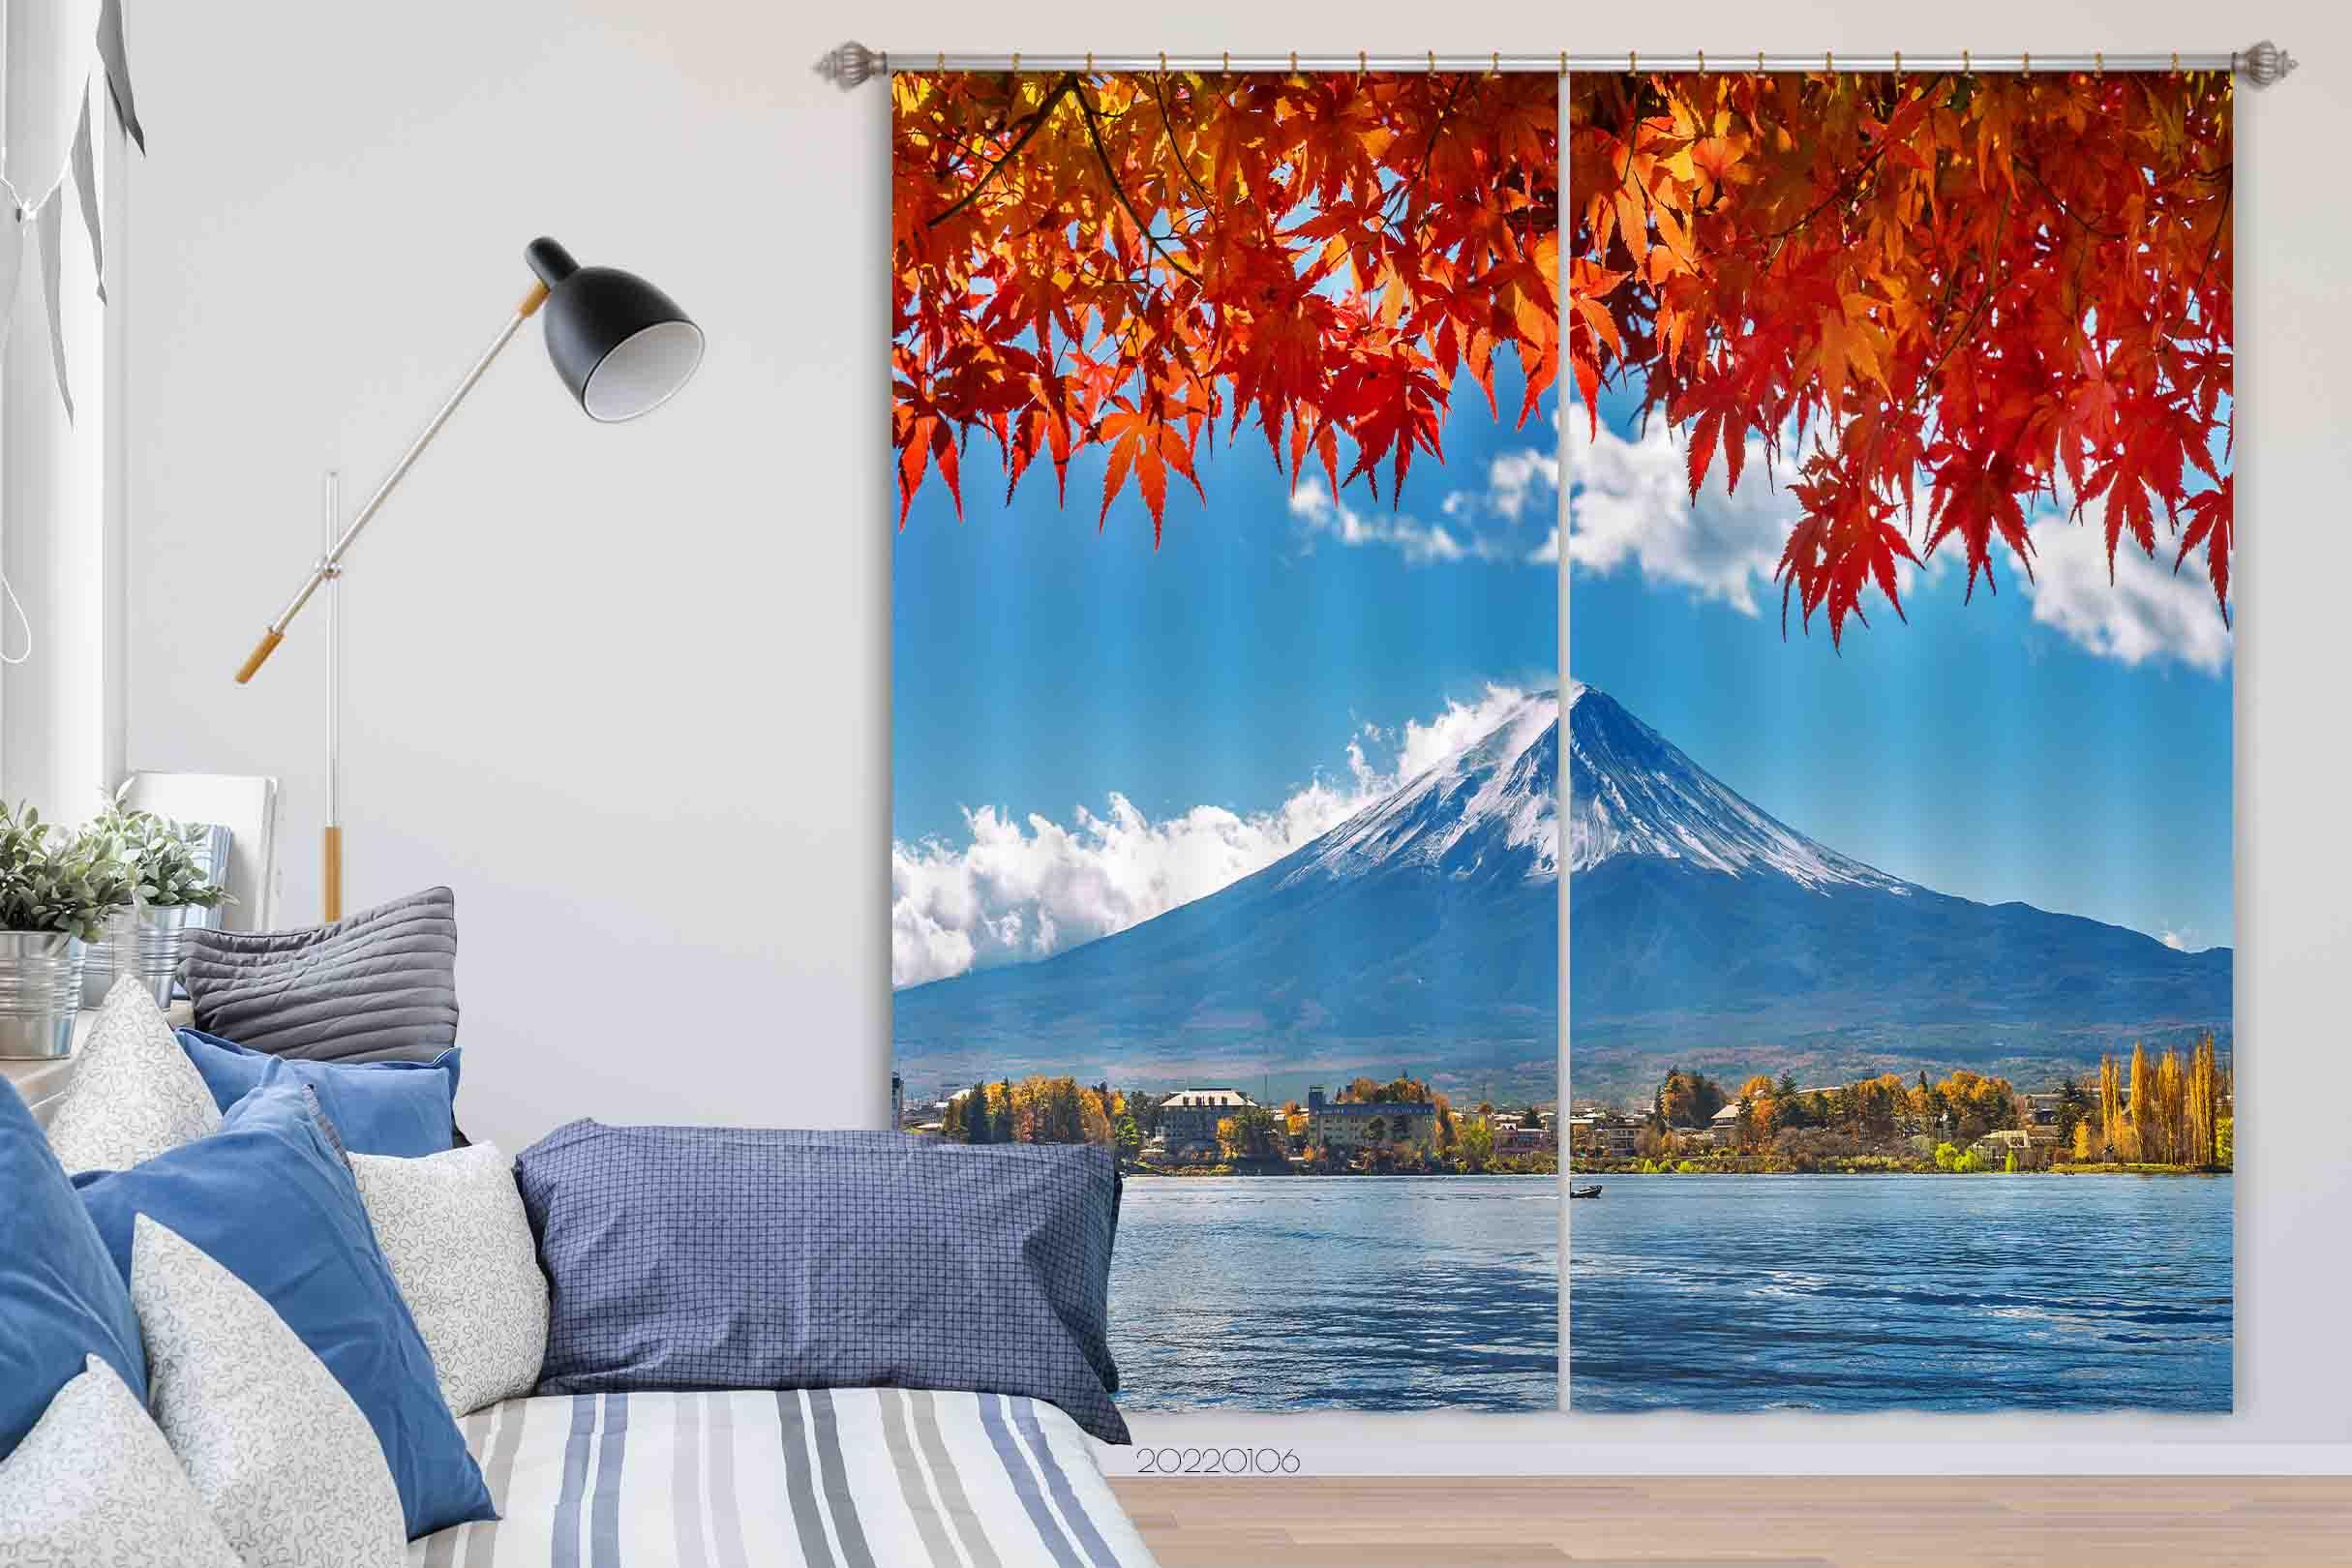 3D Autumn Japan Mount Fuji Lake Red Maple Leaf Curtains and Drapes GD 208- Jess Art Decoration